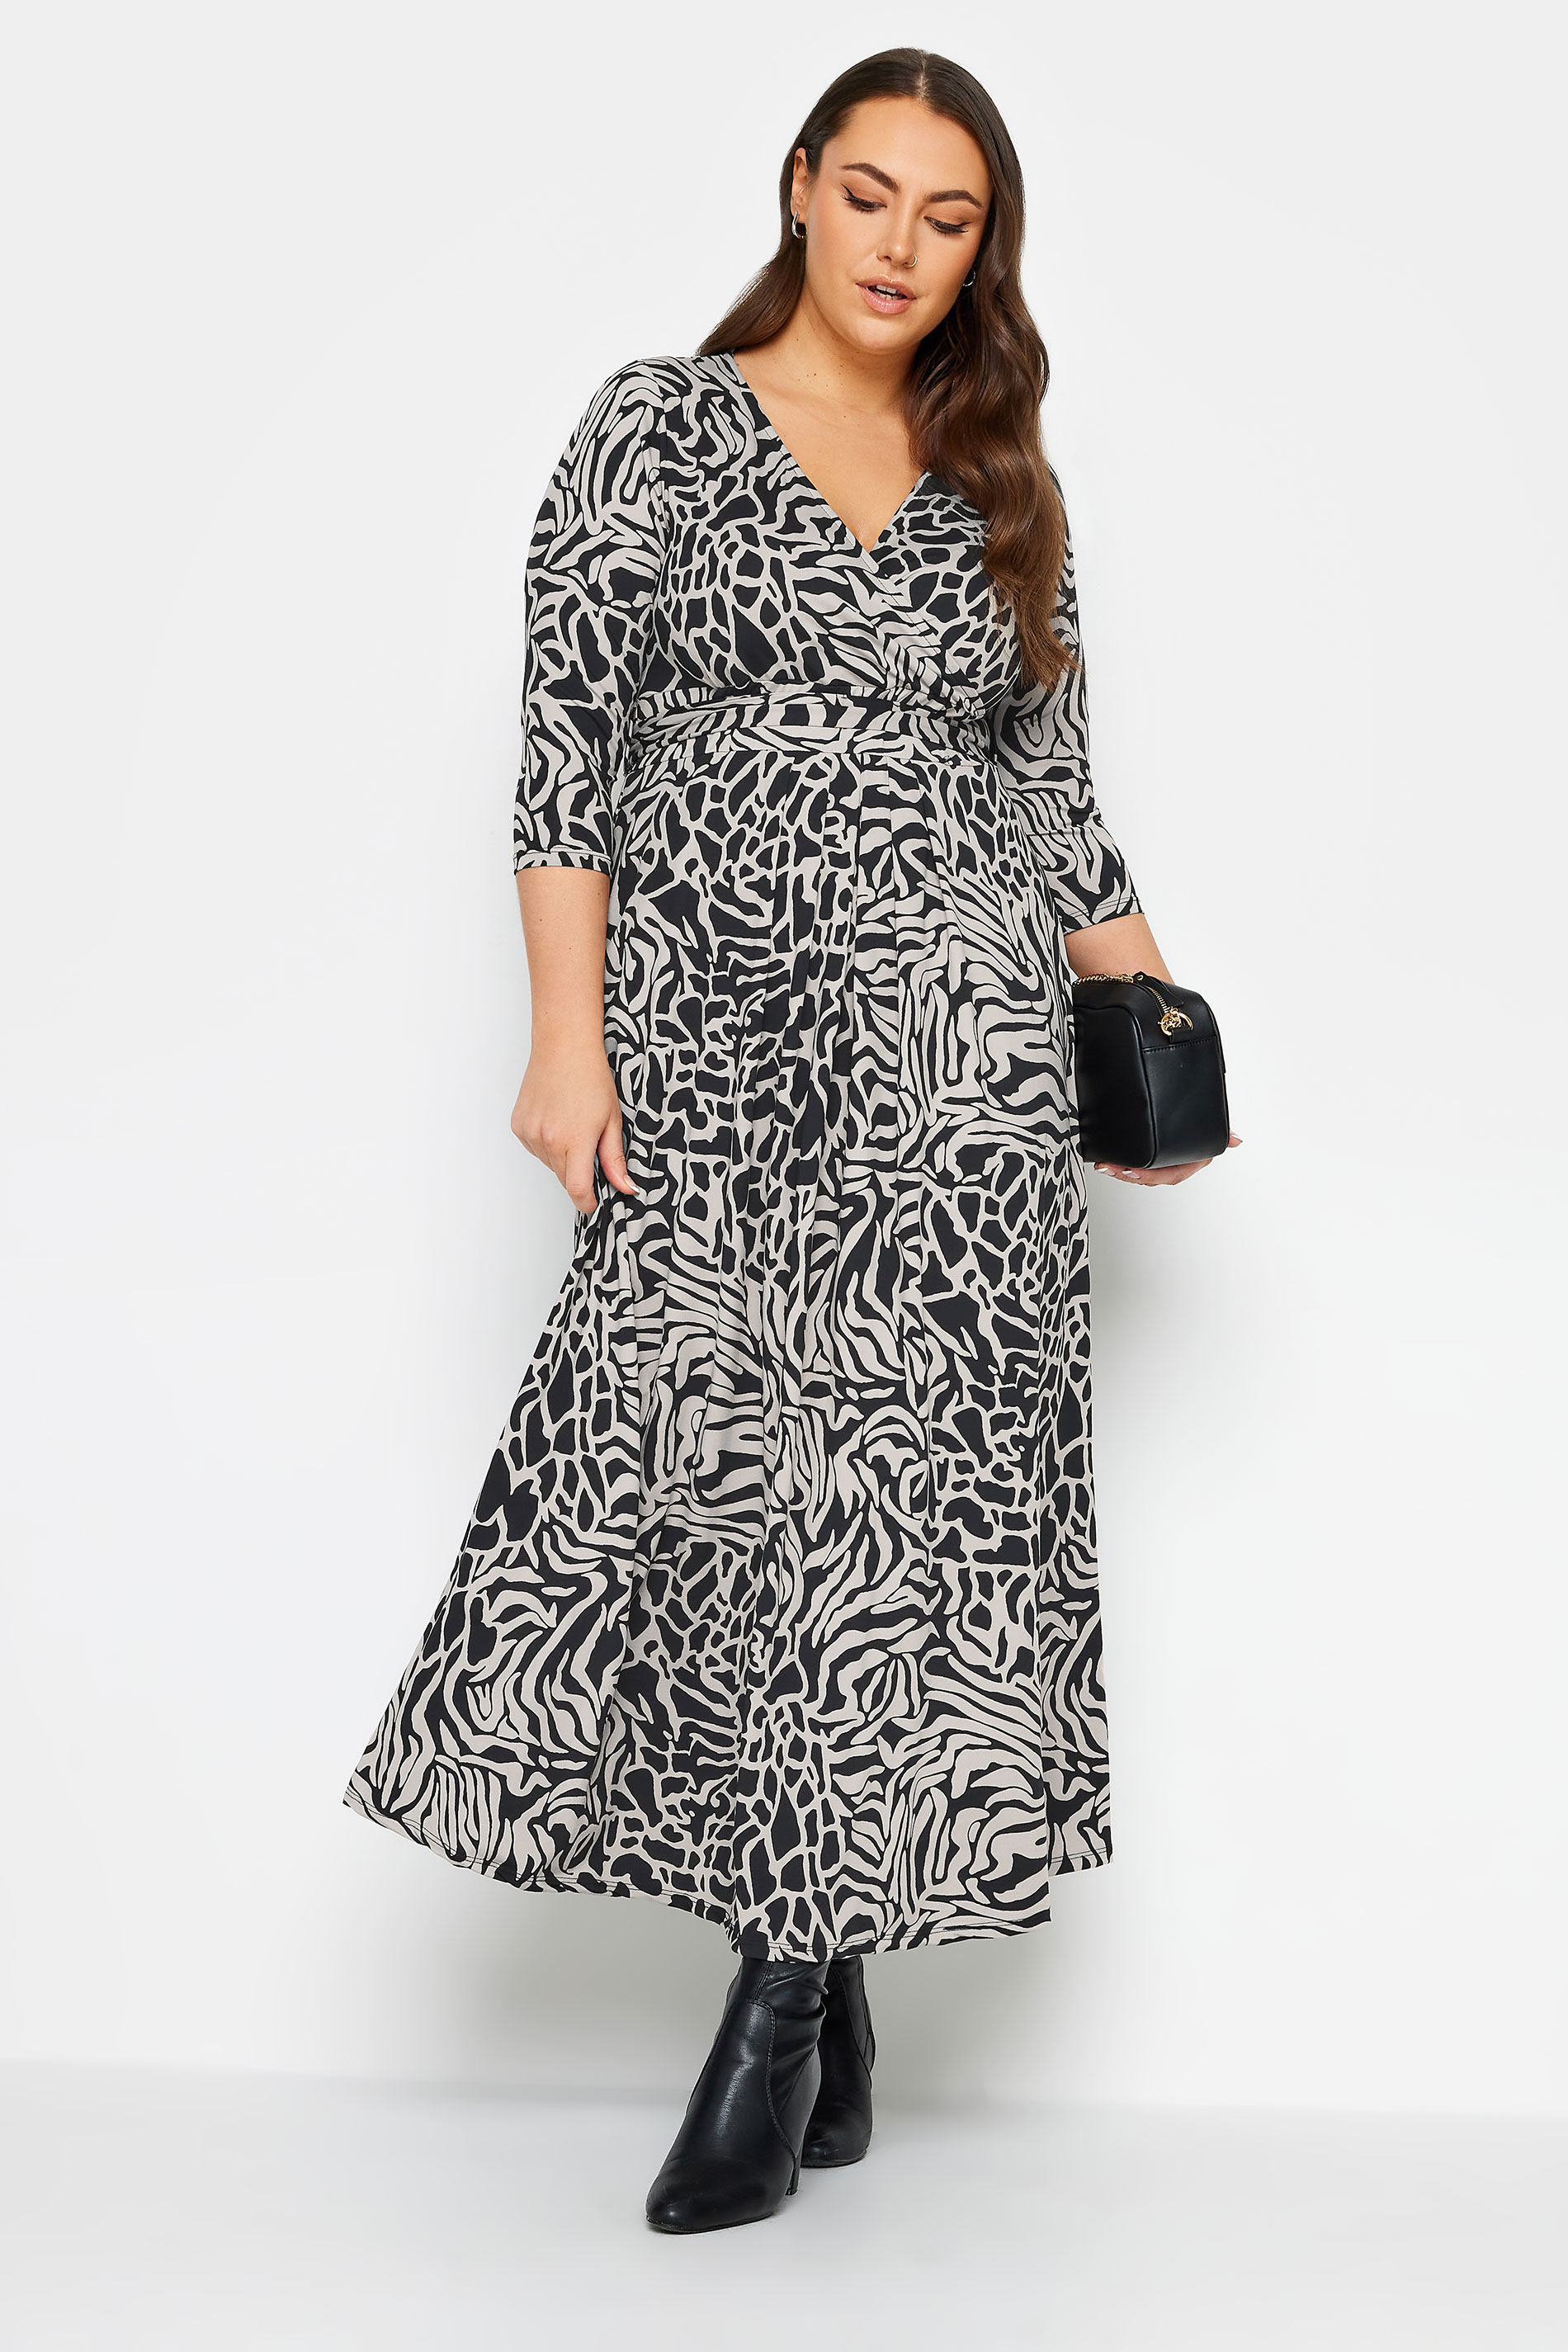 YOURS Plus Size Black Zebra Print Maxi Wrap Dress | Yours Clothing